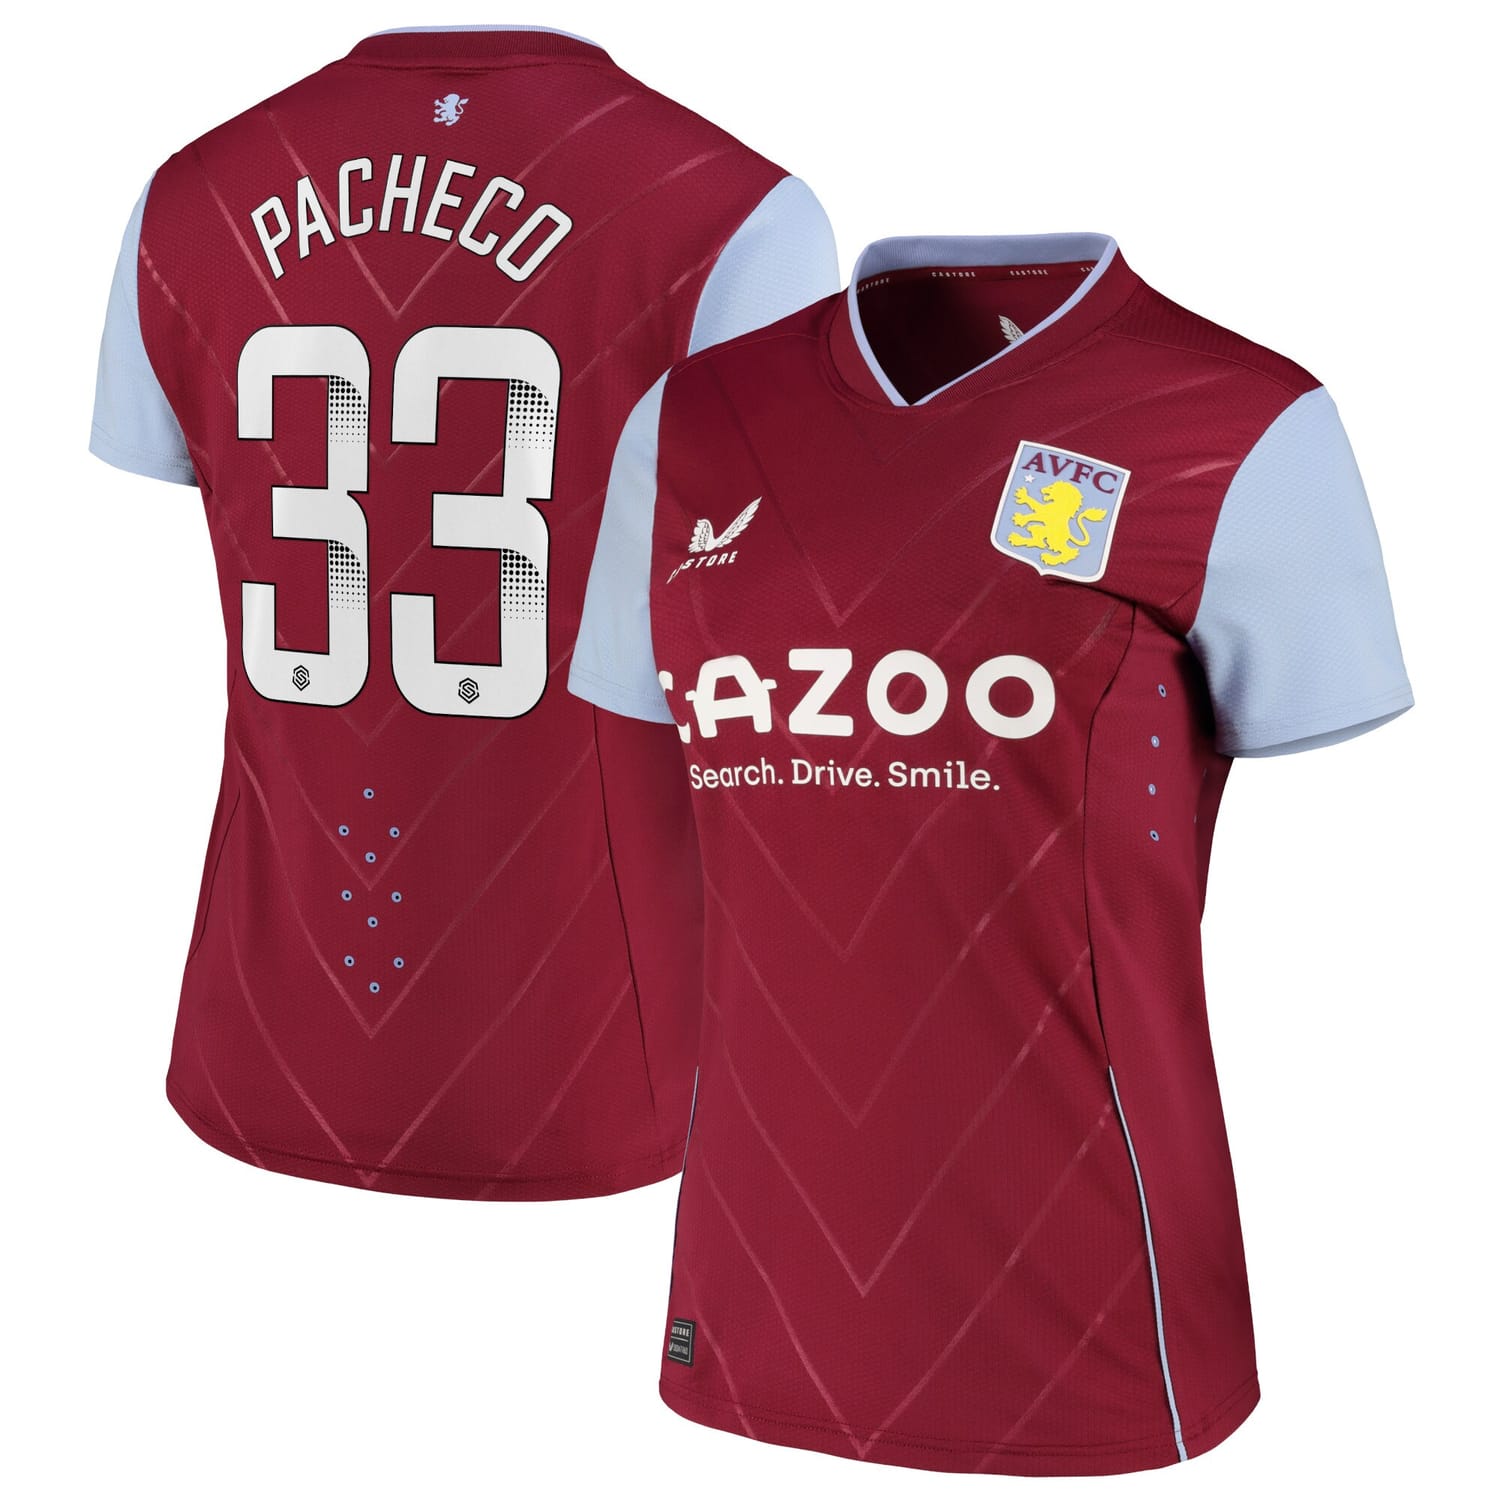 Premier League Aston Villa Home WSL Pro Jersey Shirt 2022-23 player Mayumi Pacheco 33 printing for Women